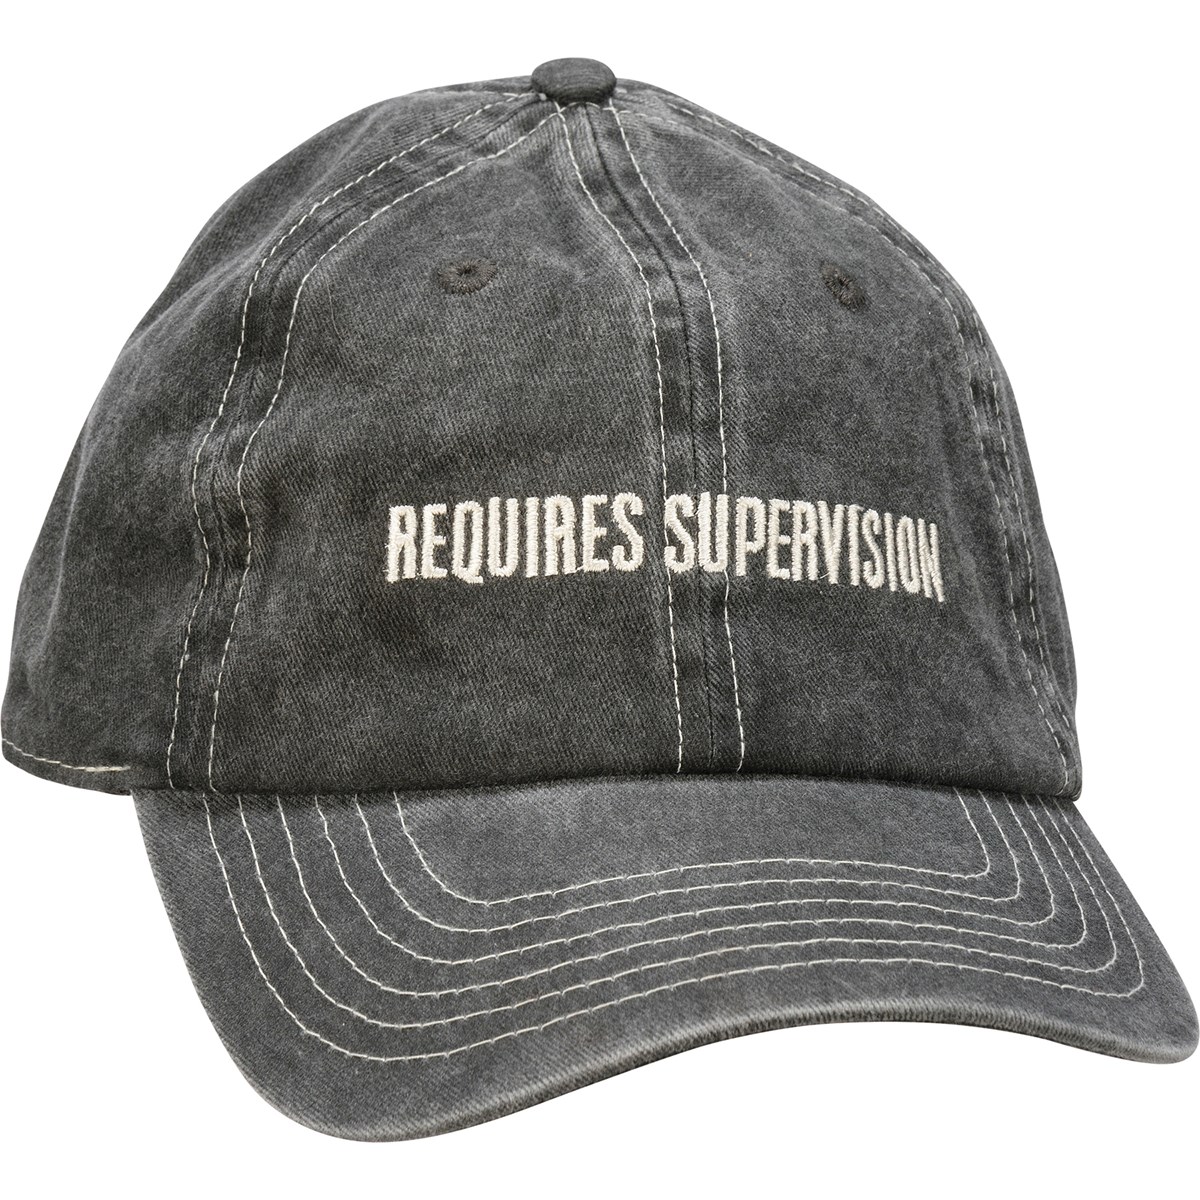 Requires Supervision Baseball Cap - Cotton, Metal